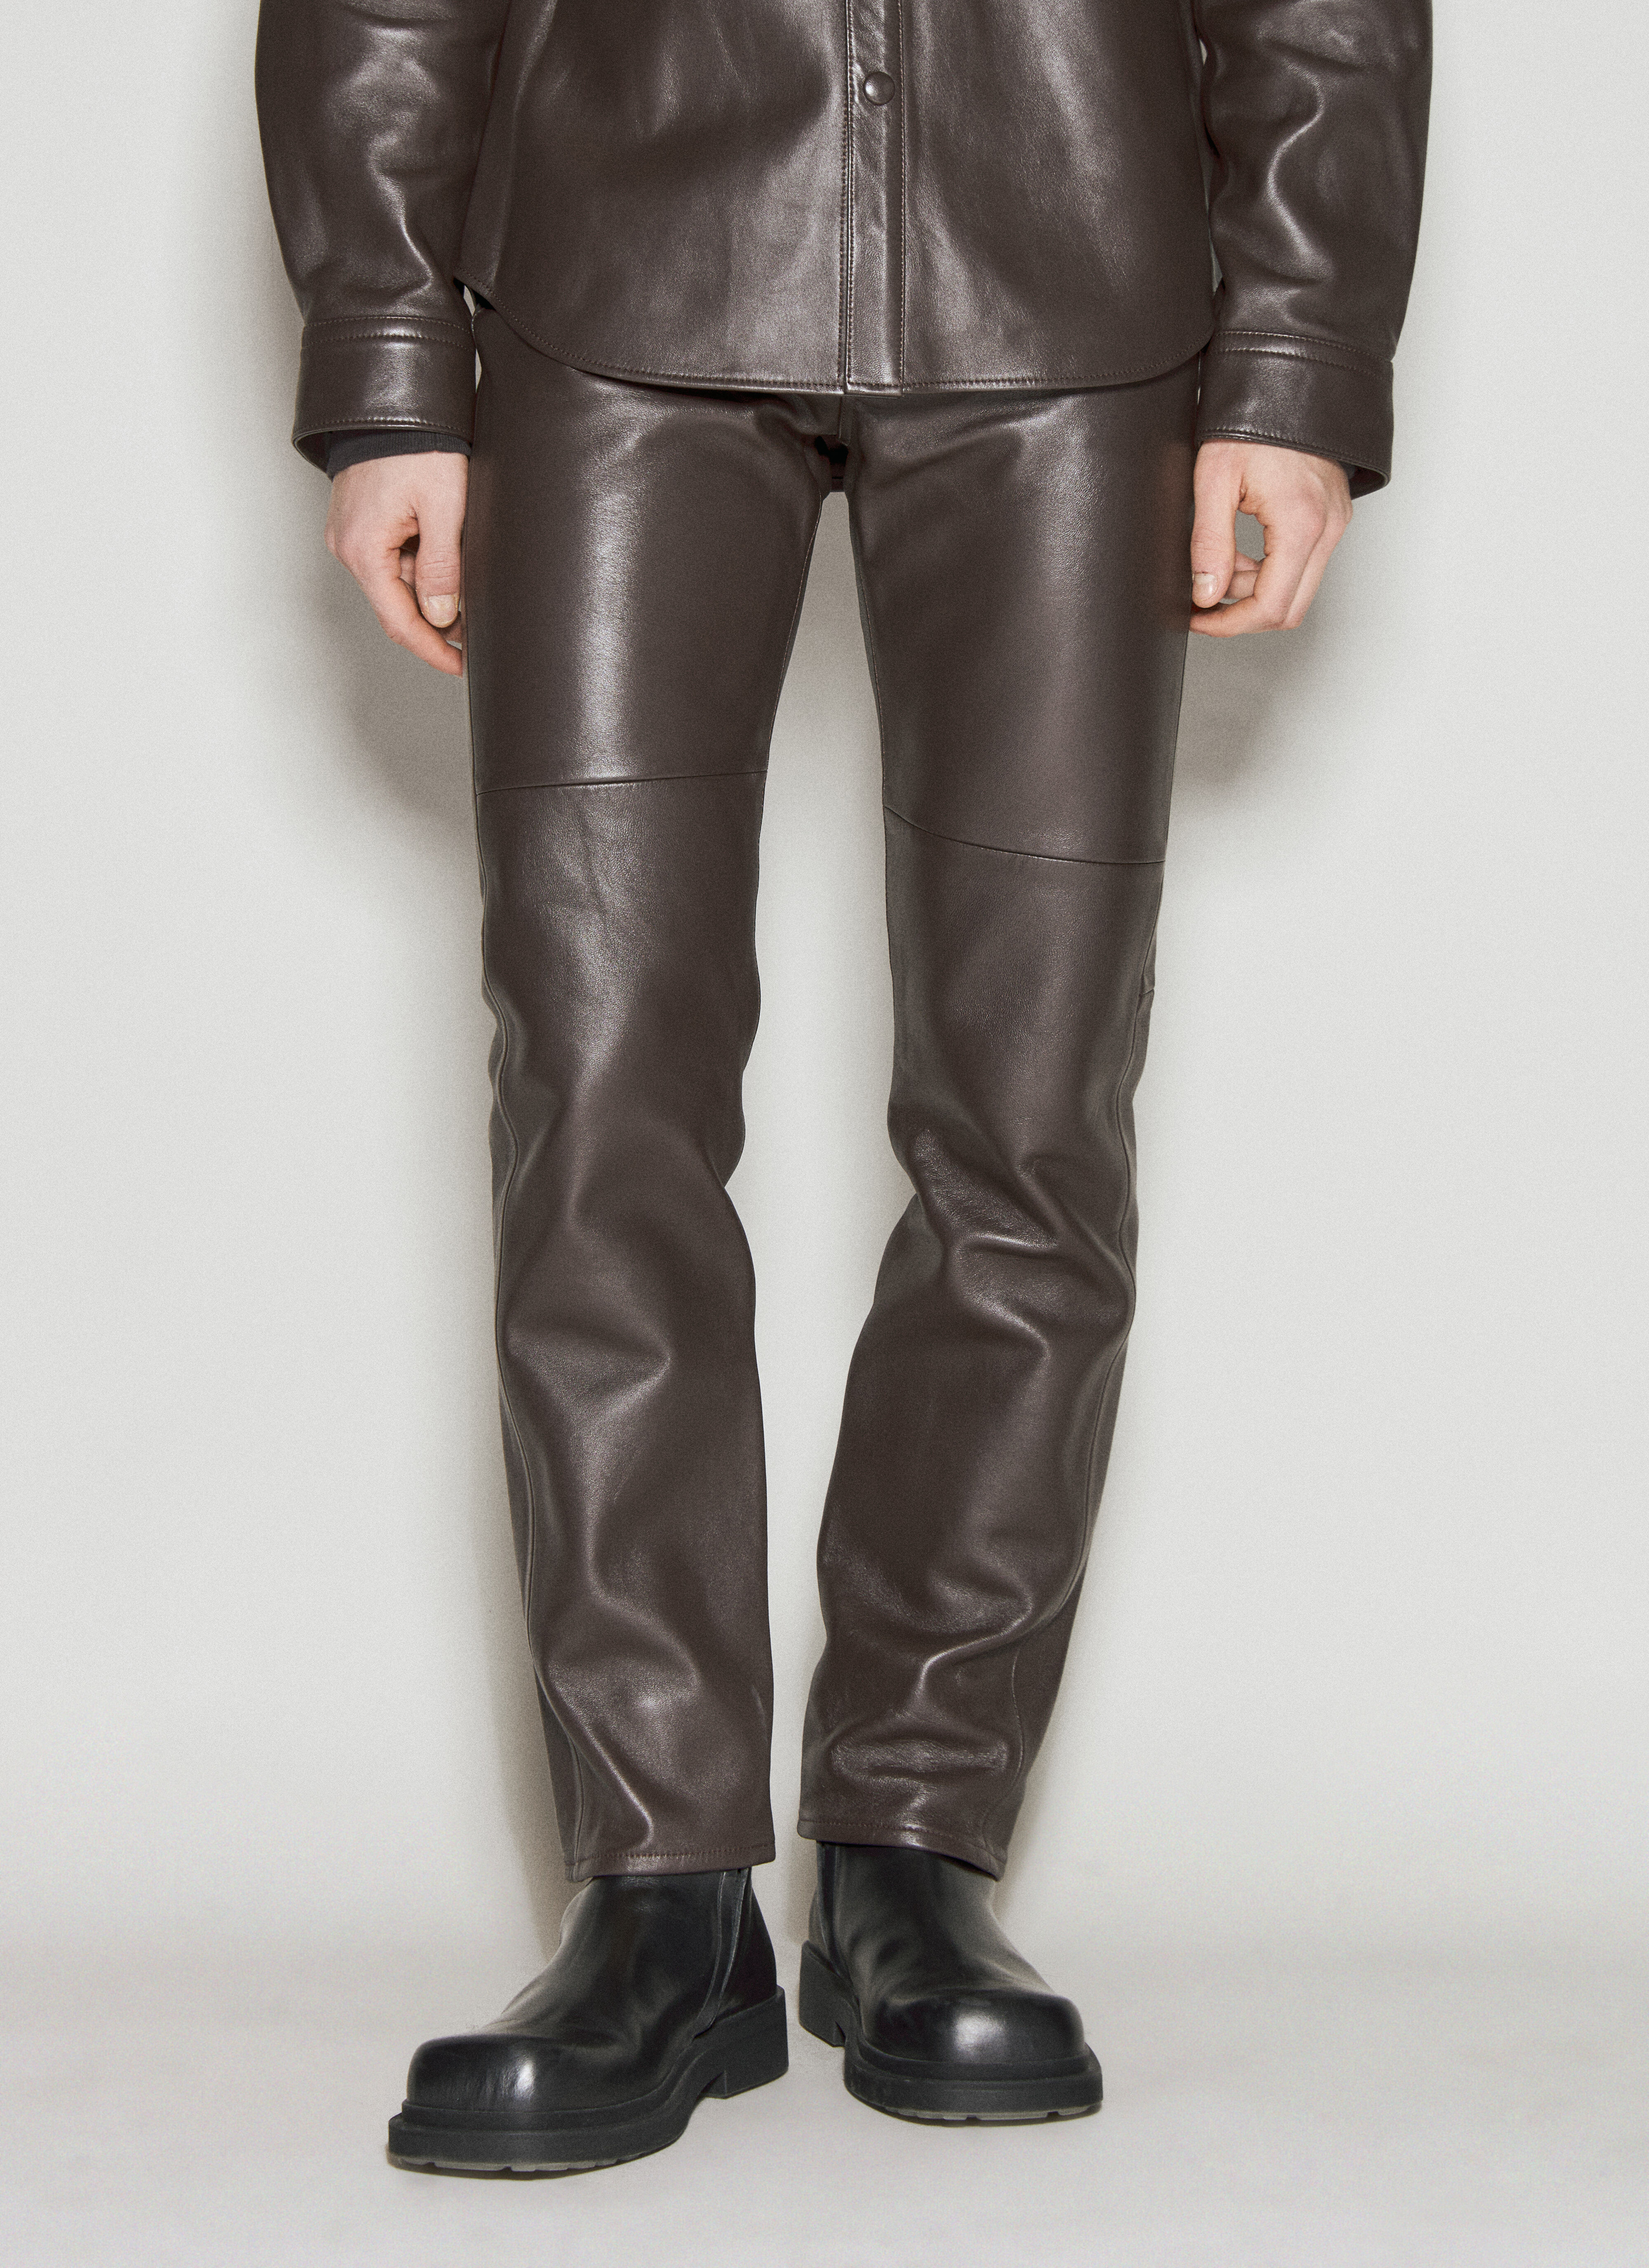 Balenciaga x Acne Studios Leather Pants Black bal0154003